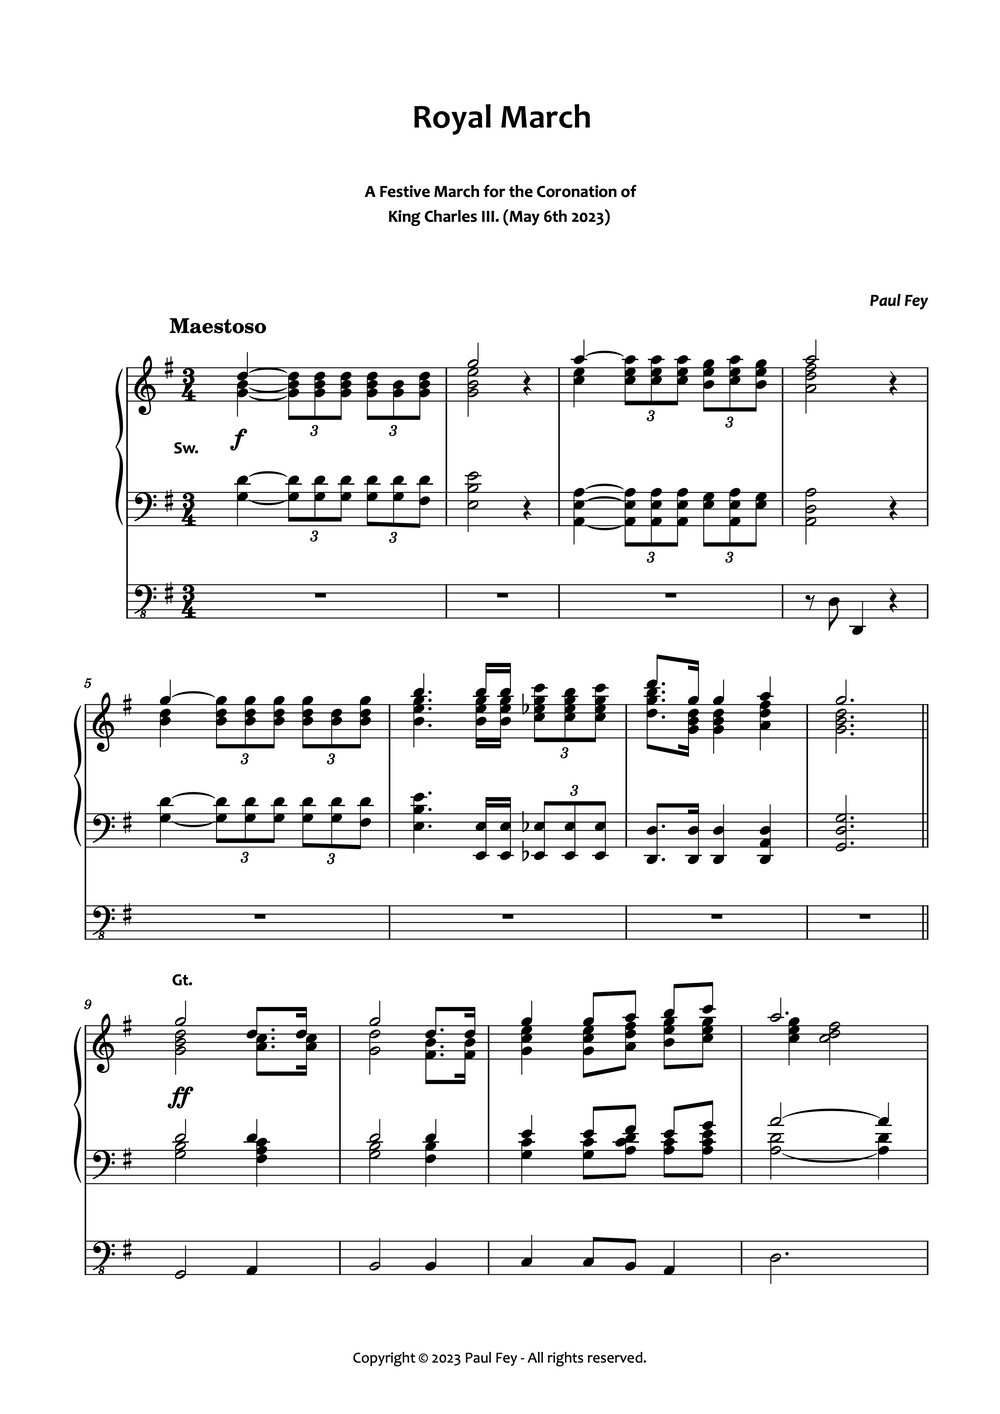 Royal March for Organ (Sheet Music) - Music for Organ Paul Fey Organist